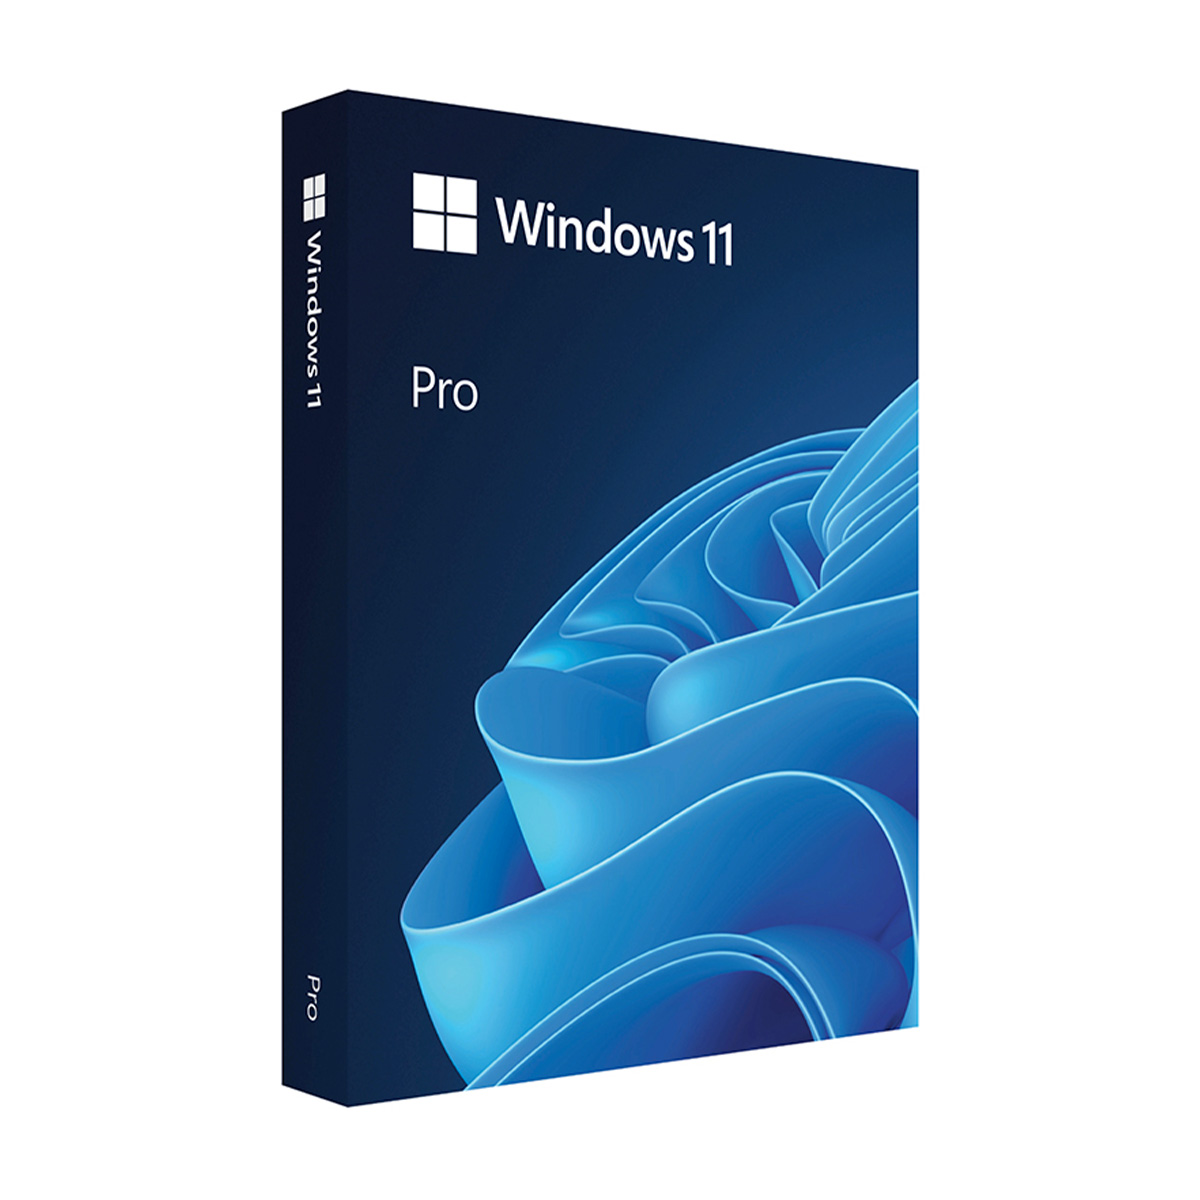 Featured image for “Microsoft マイクロソフト Windows 11 Pro 日本語版”